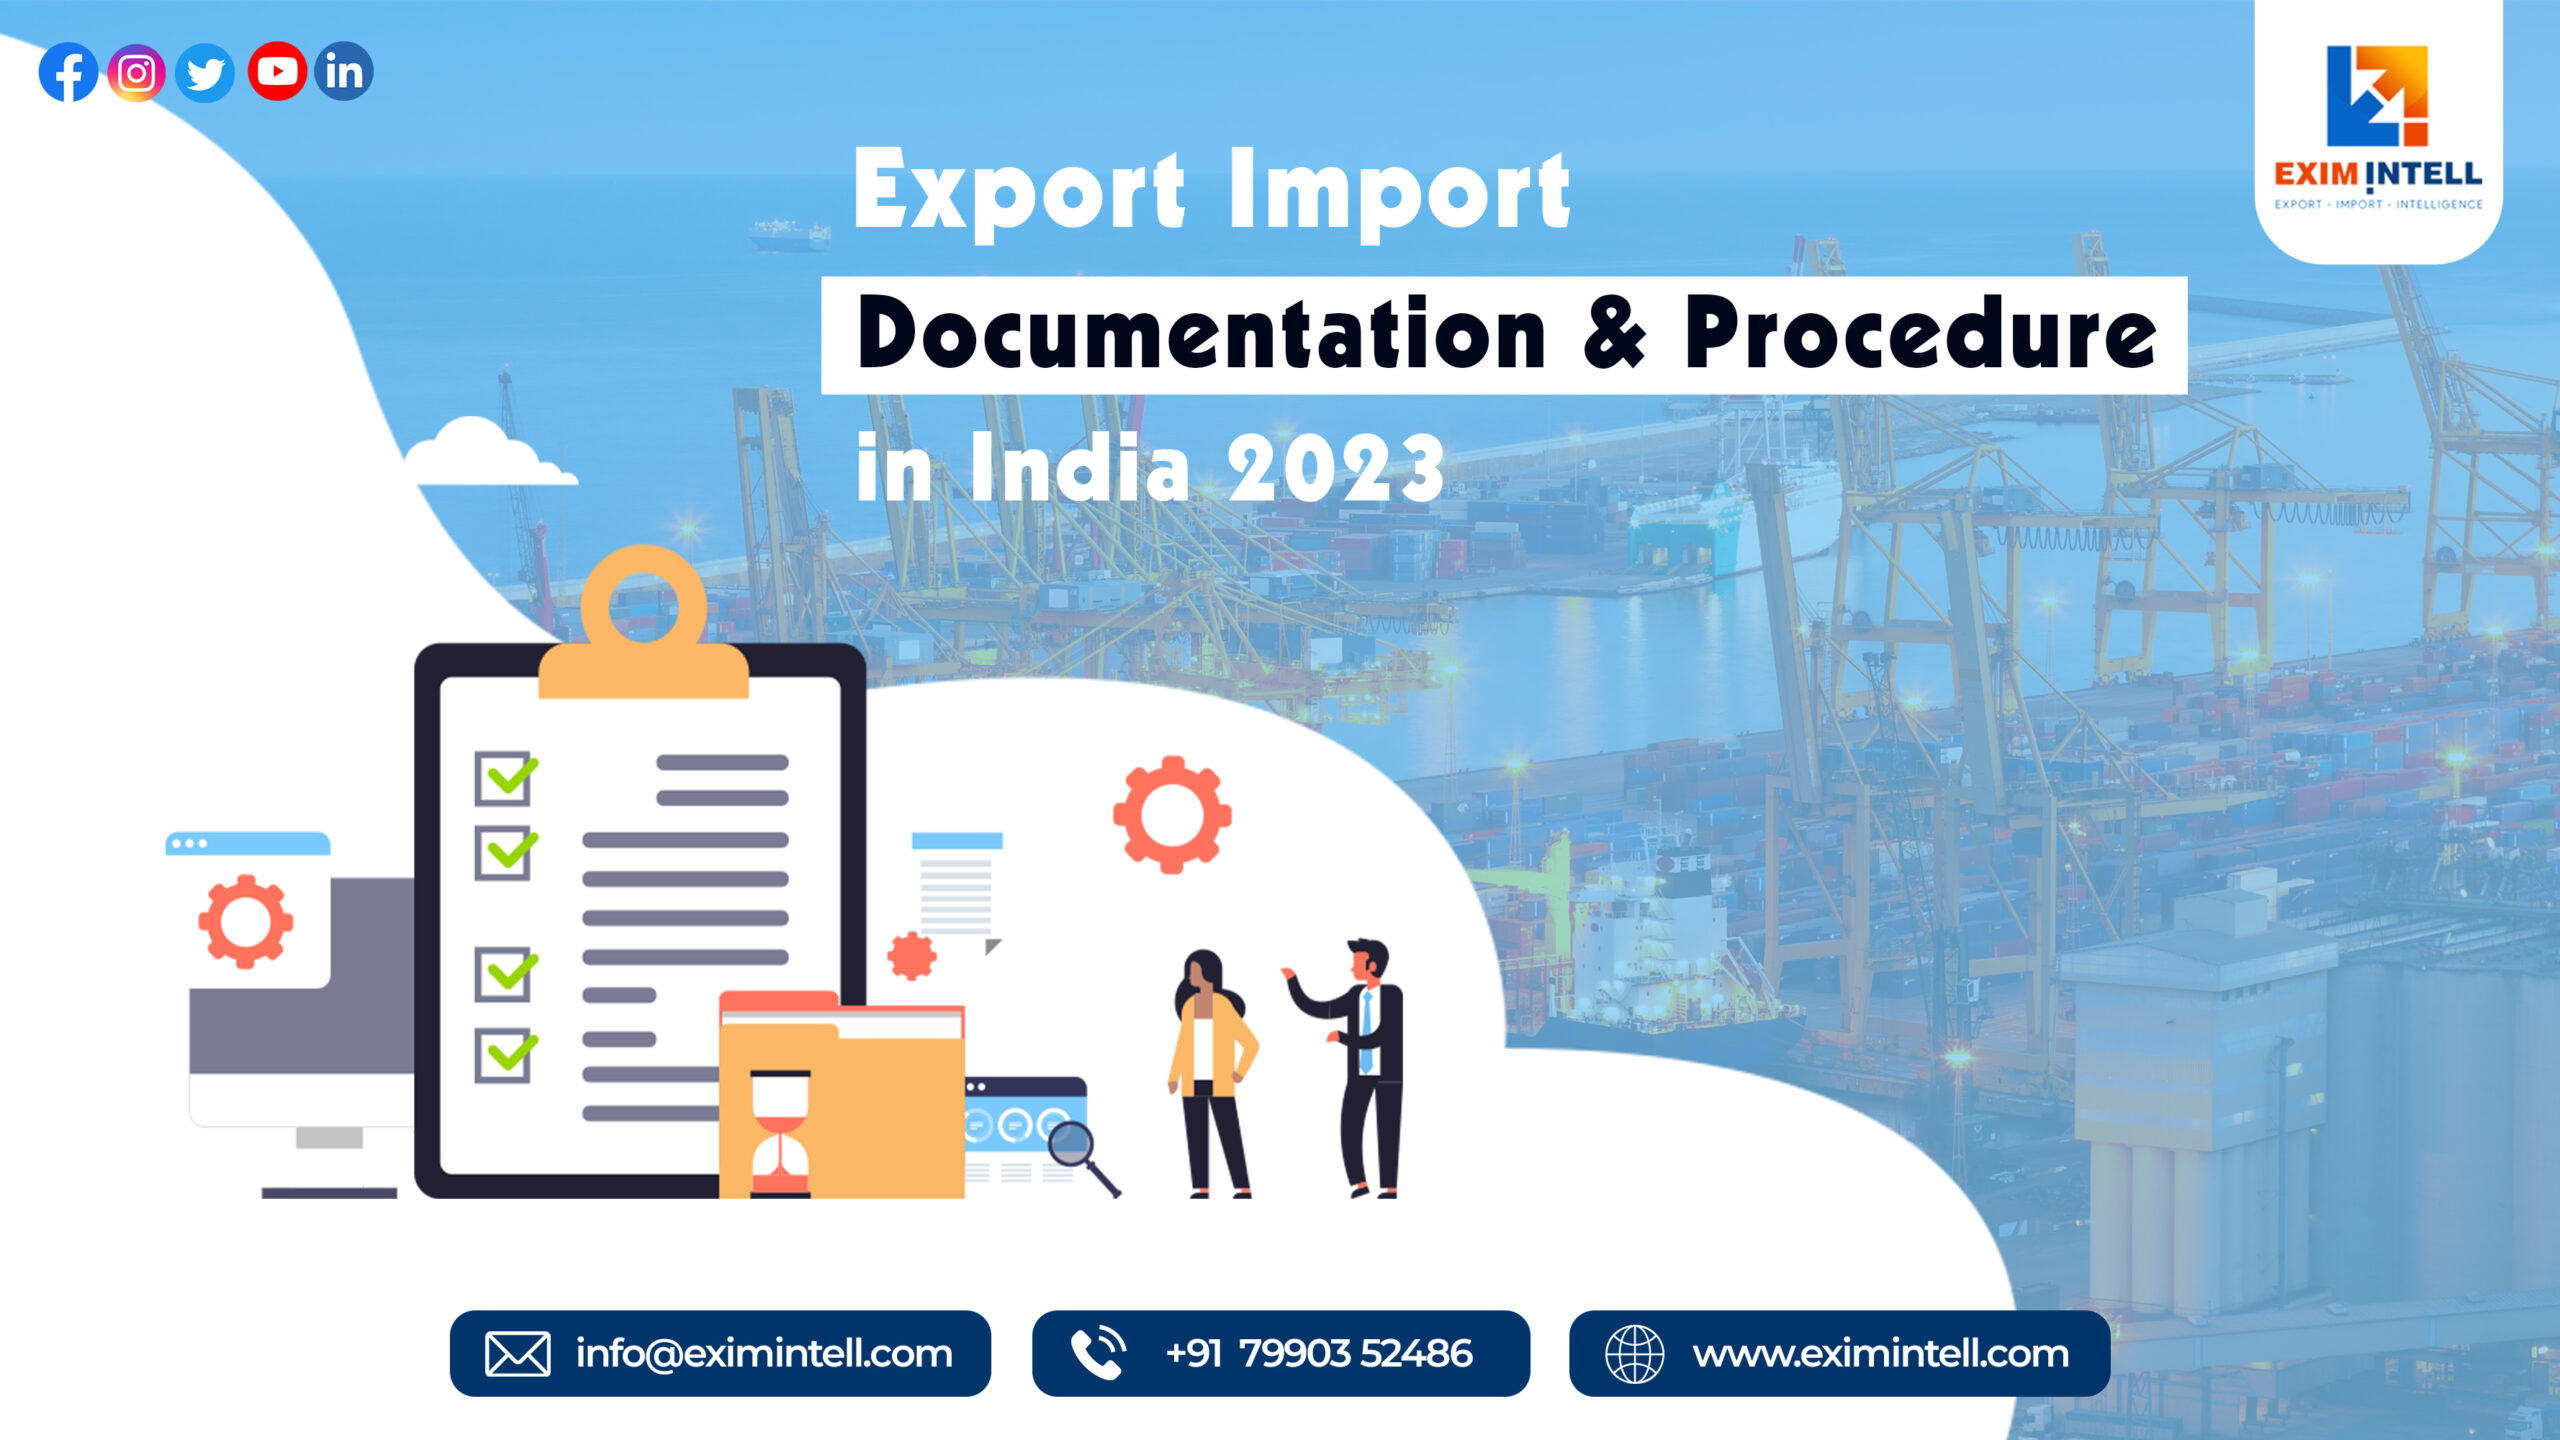 Export Import Documentation and Procedure in India 2023